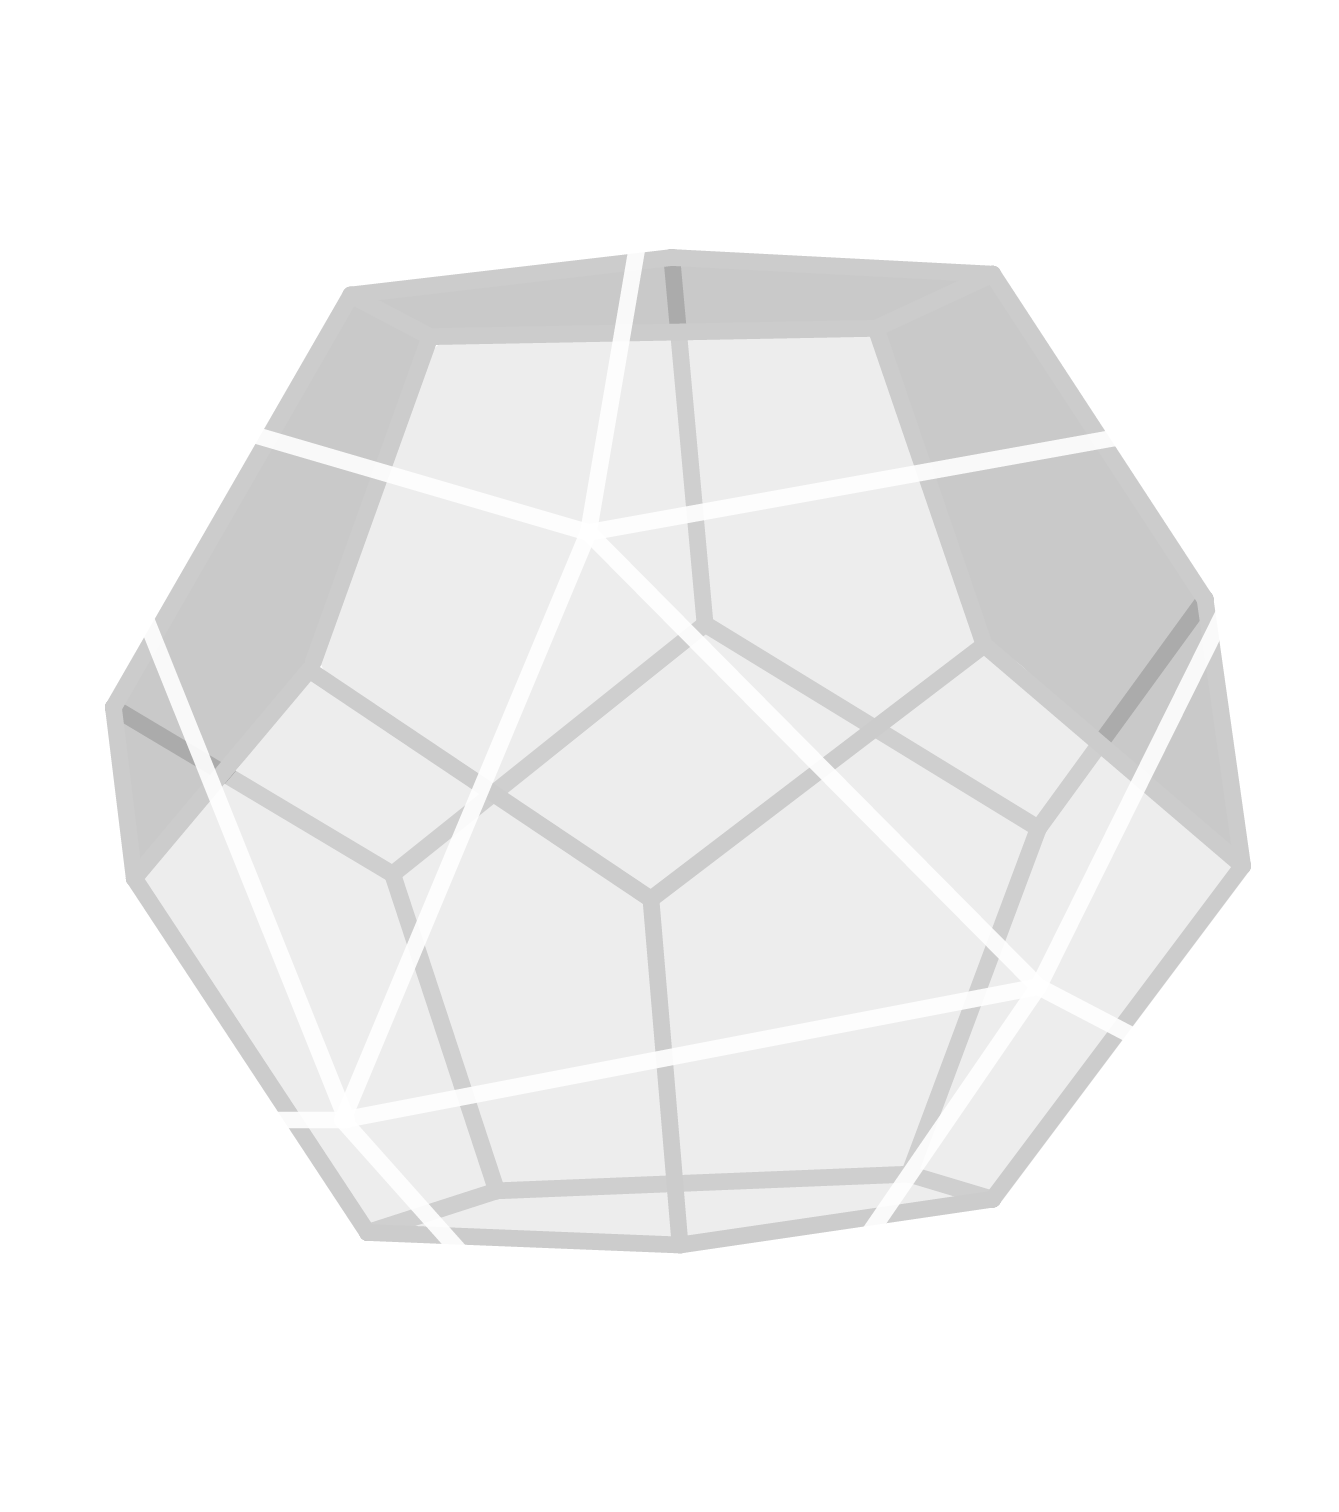 Logo do grupo A5: o icosahedro regular